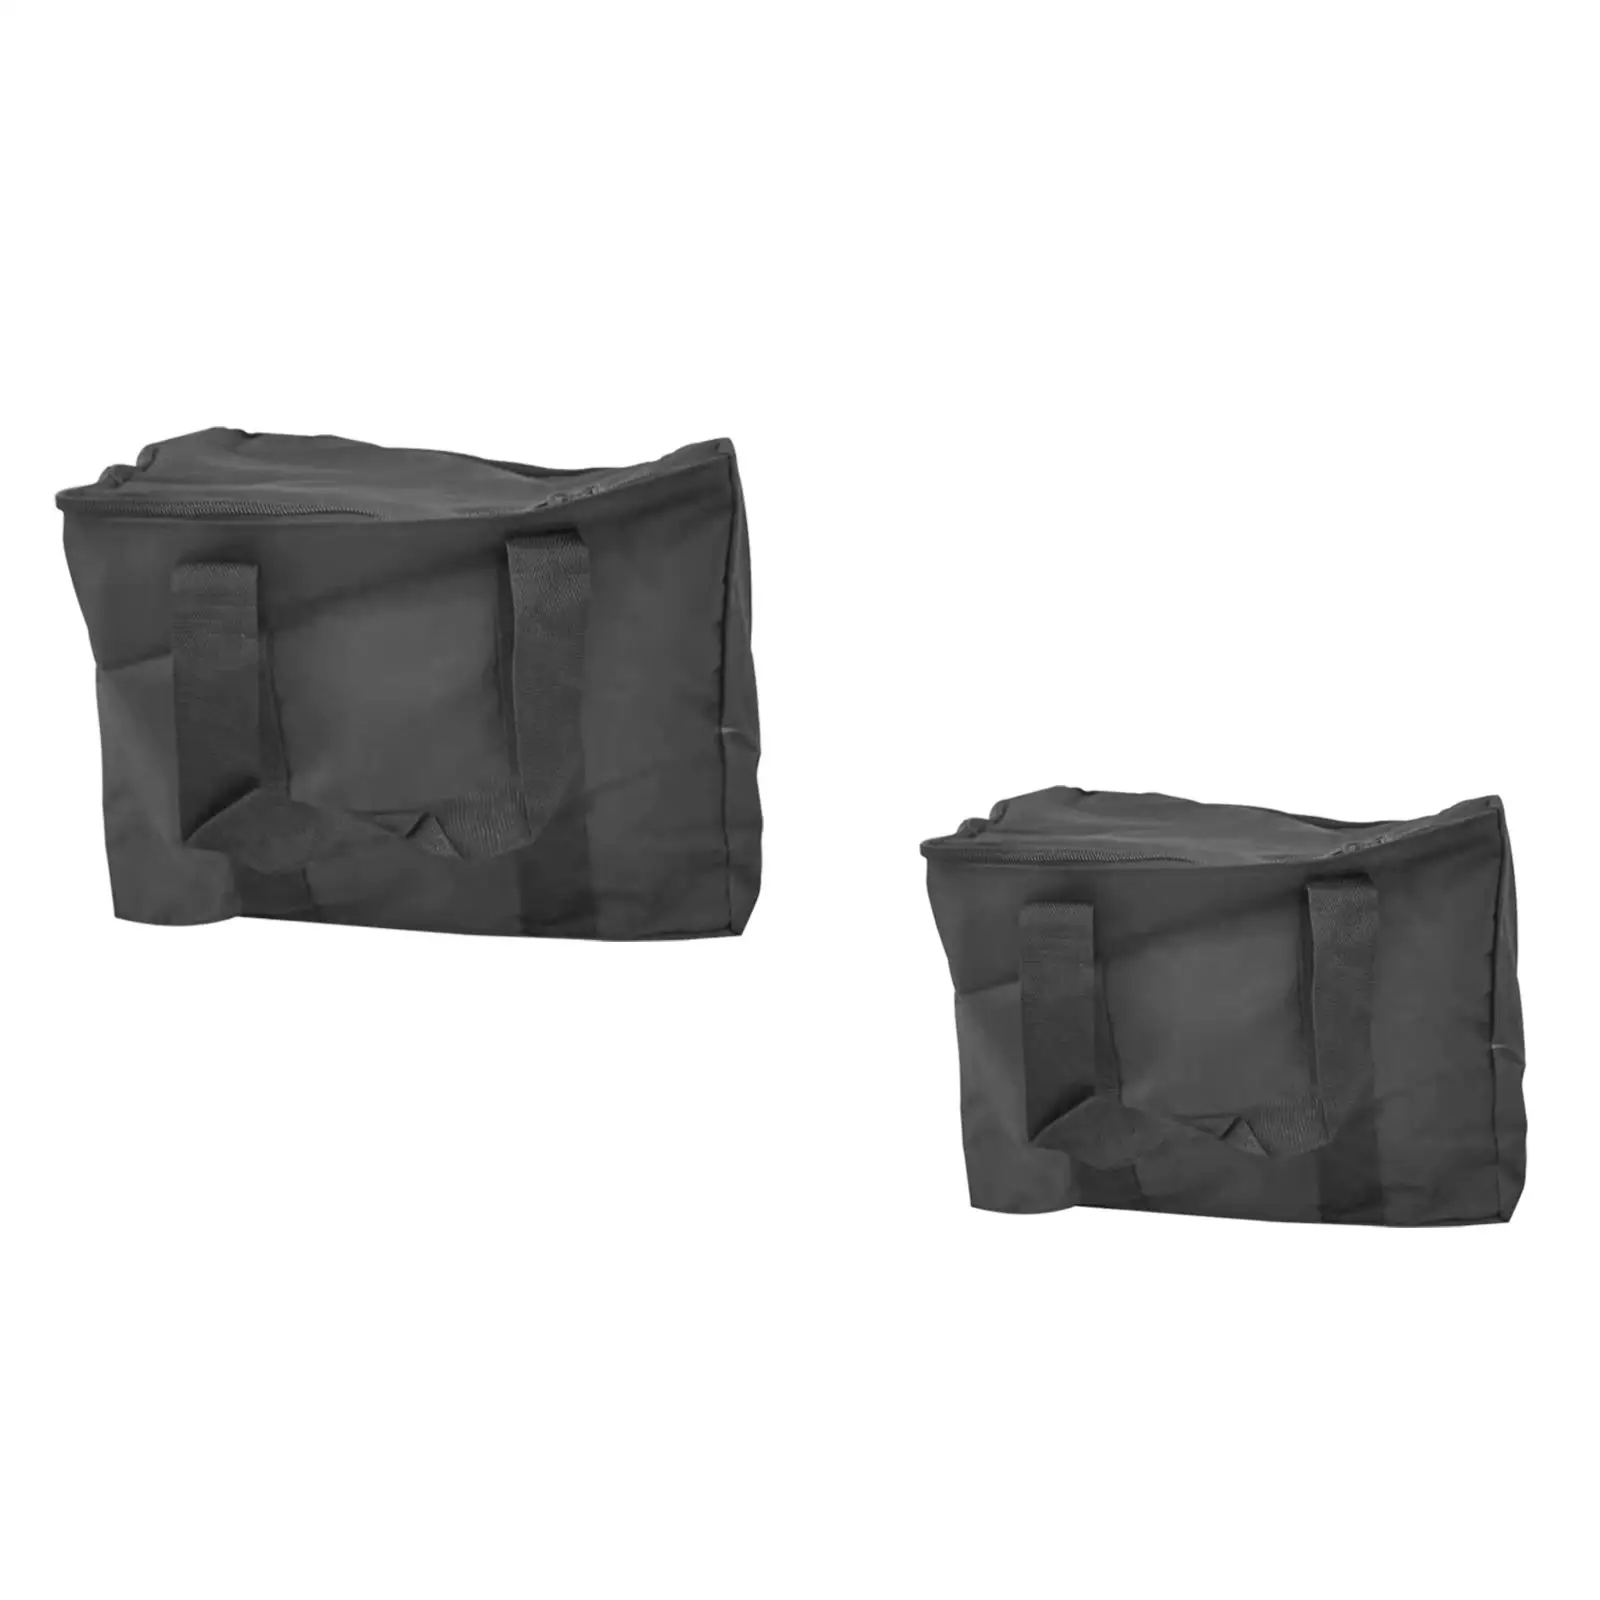 Multi Purpose Camp Stove Burner Carry Case Container Waterproof Picnic Bag